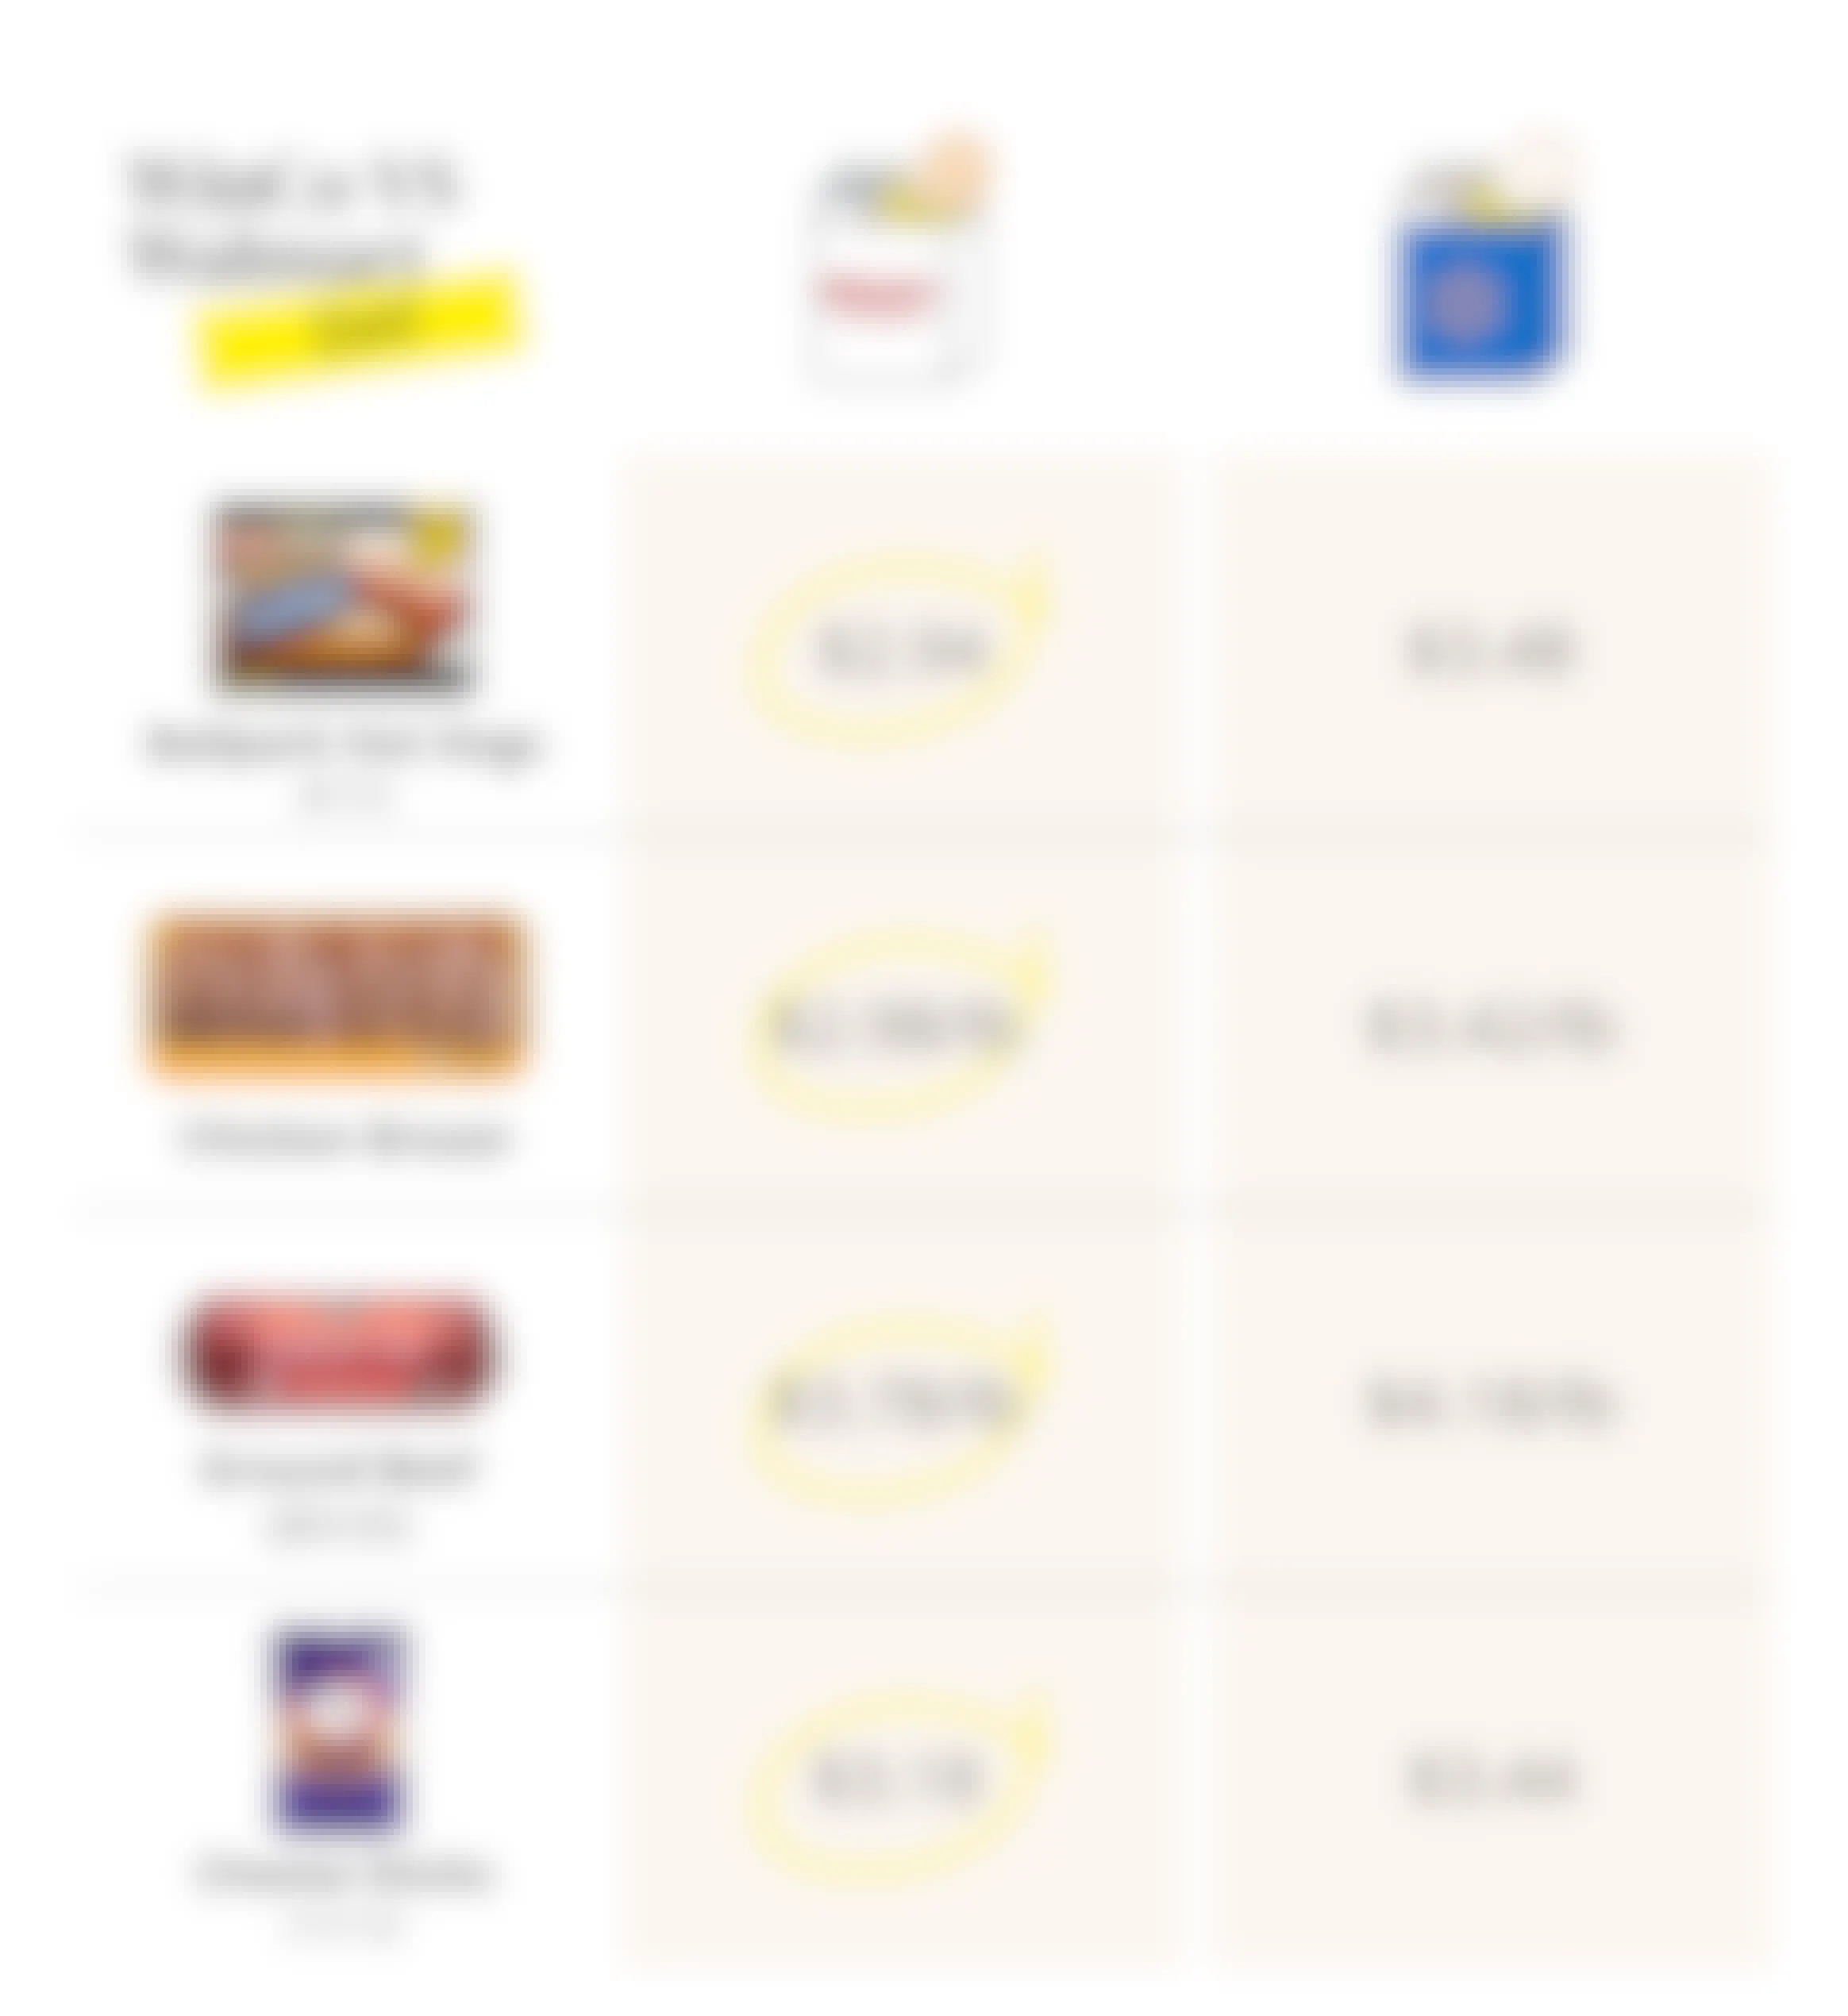 How WinCo prices compare to Walmart prices for deli items.